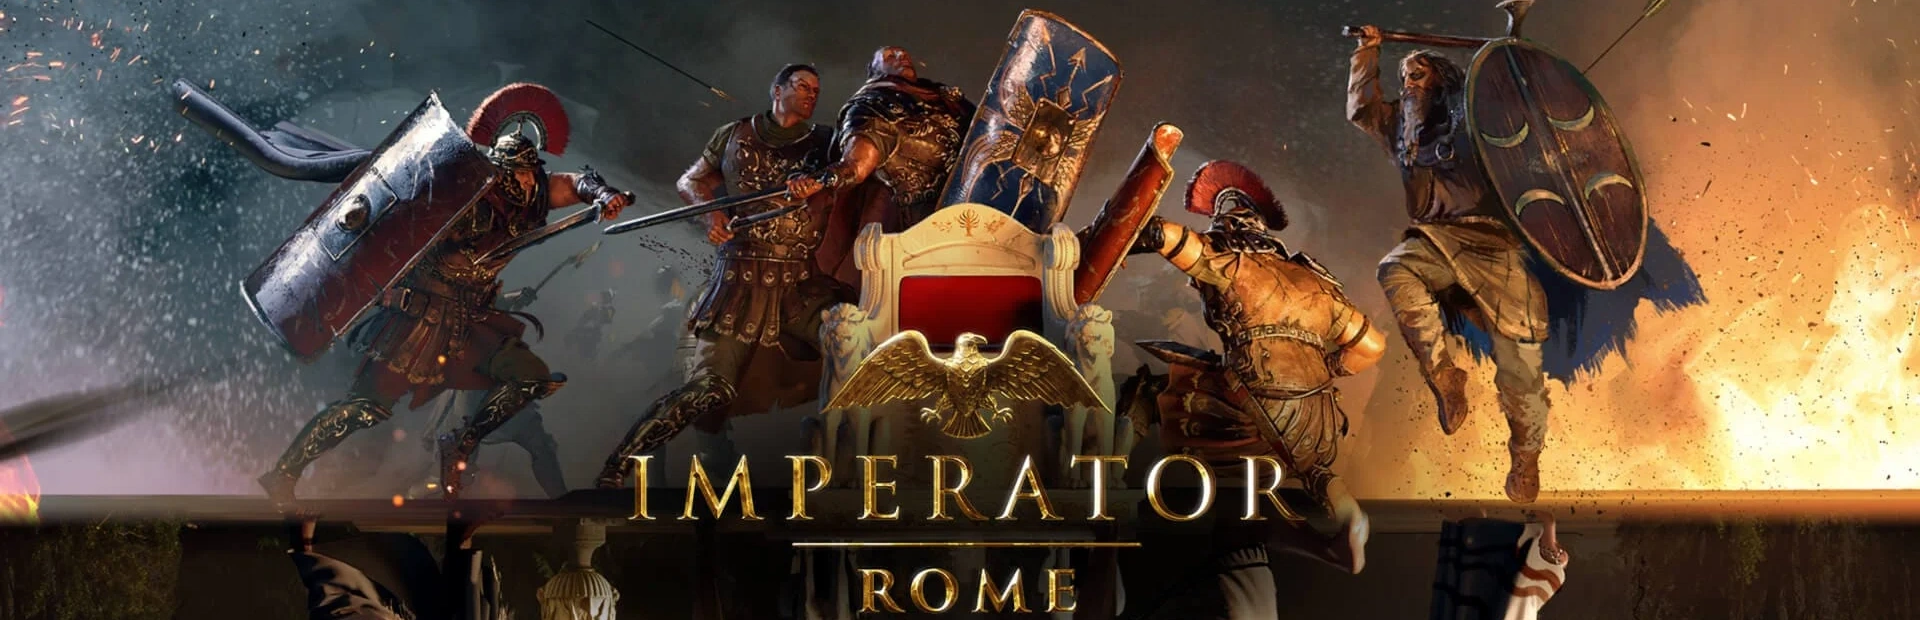 Imperator.Rome .banner2